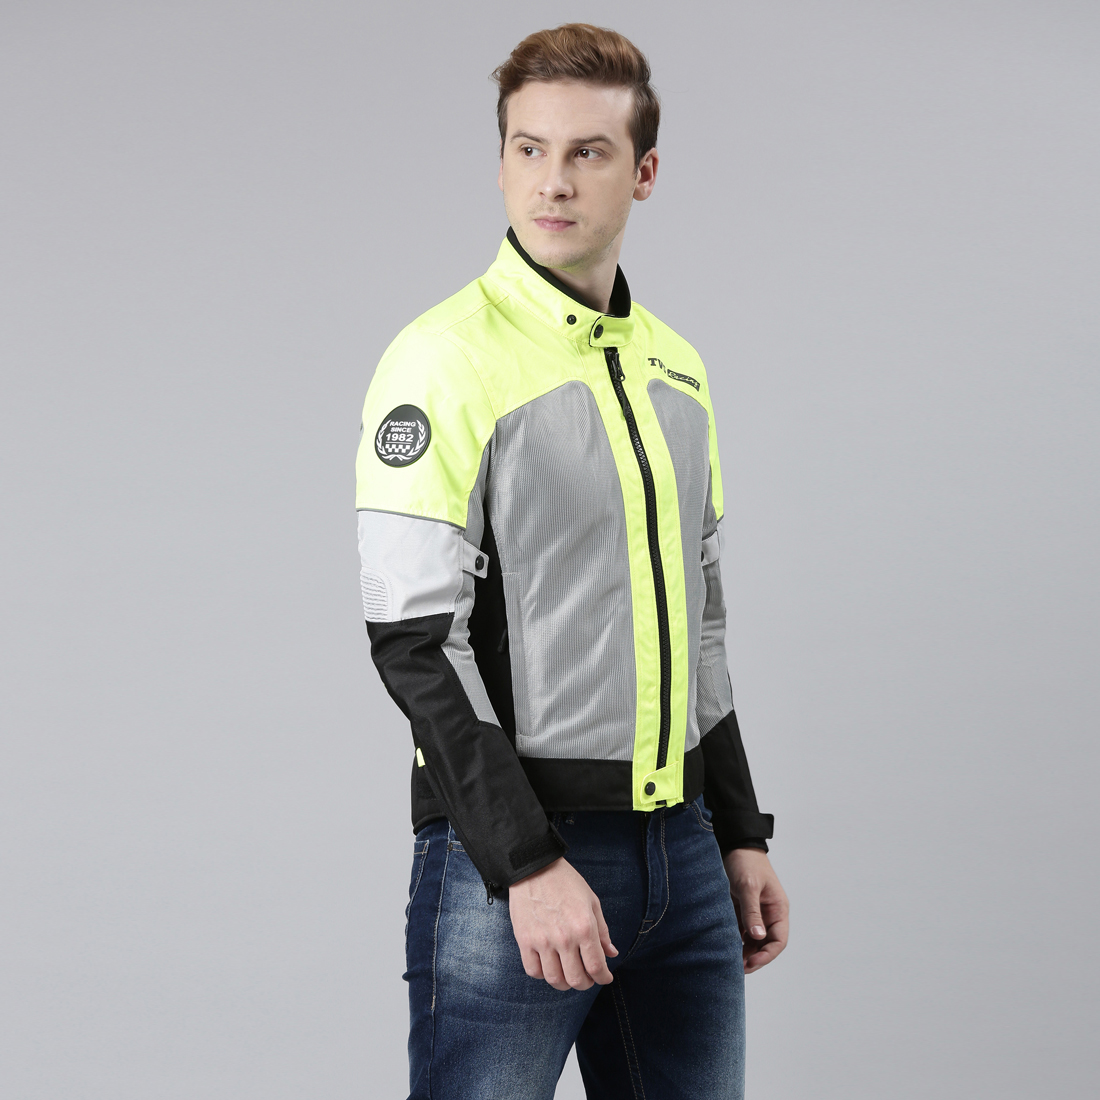  TVS Racing Asphalt Riding Jacket for Men- High Abrasion 600D Polyester, CE Level 2 Armour Protection – Essential Bike Jacket for Bikers (Grey)